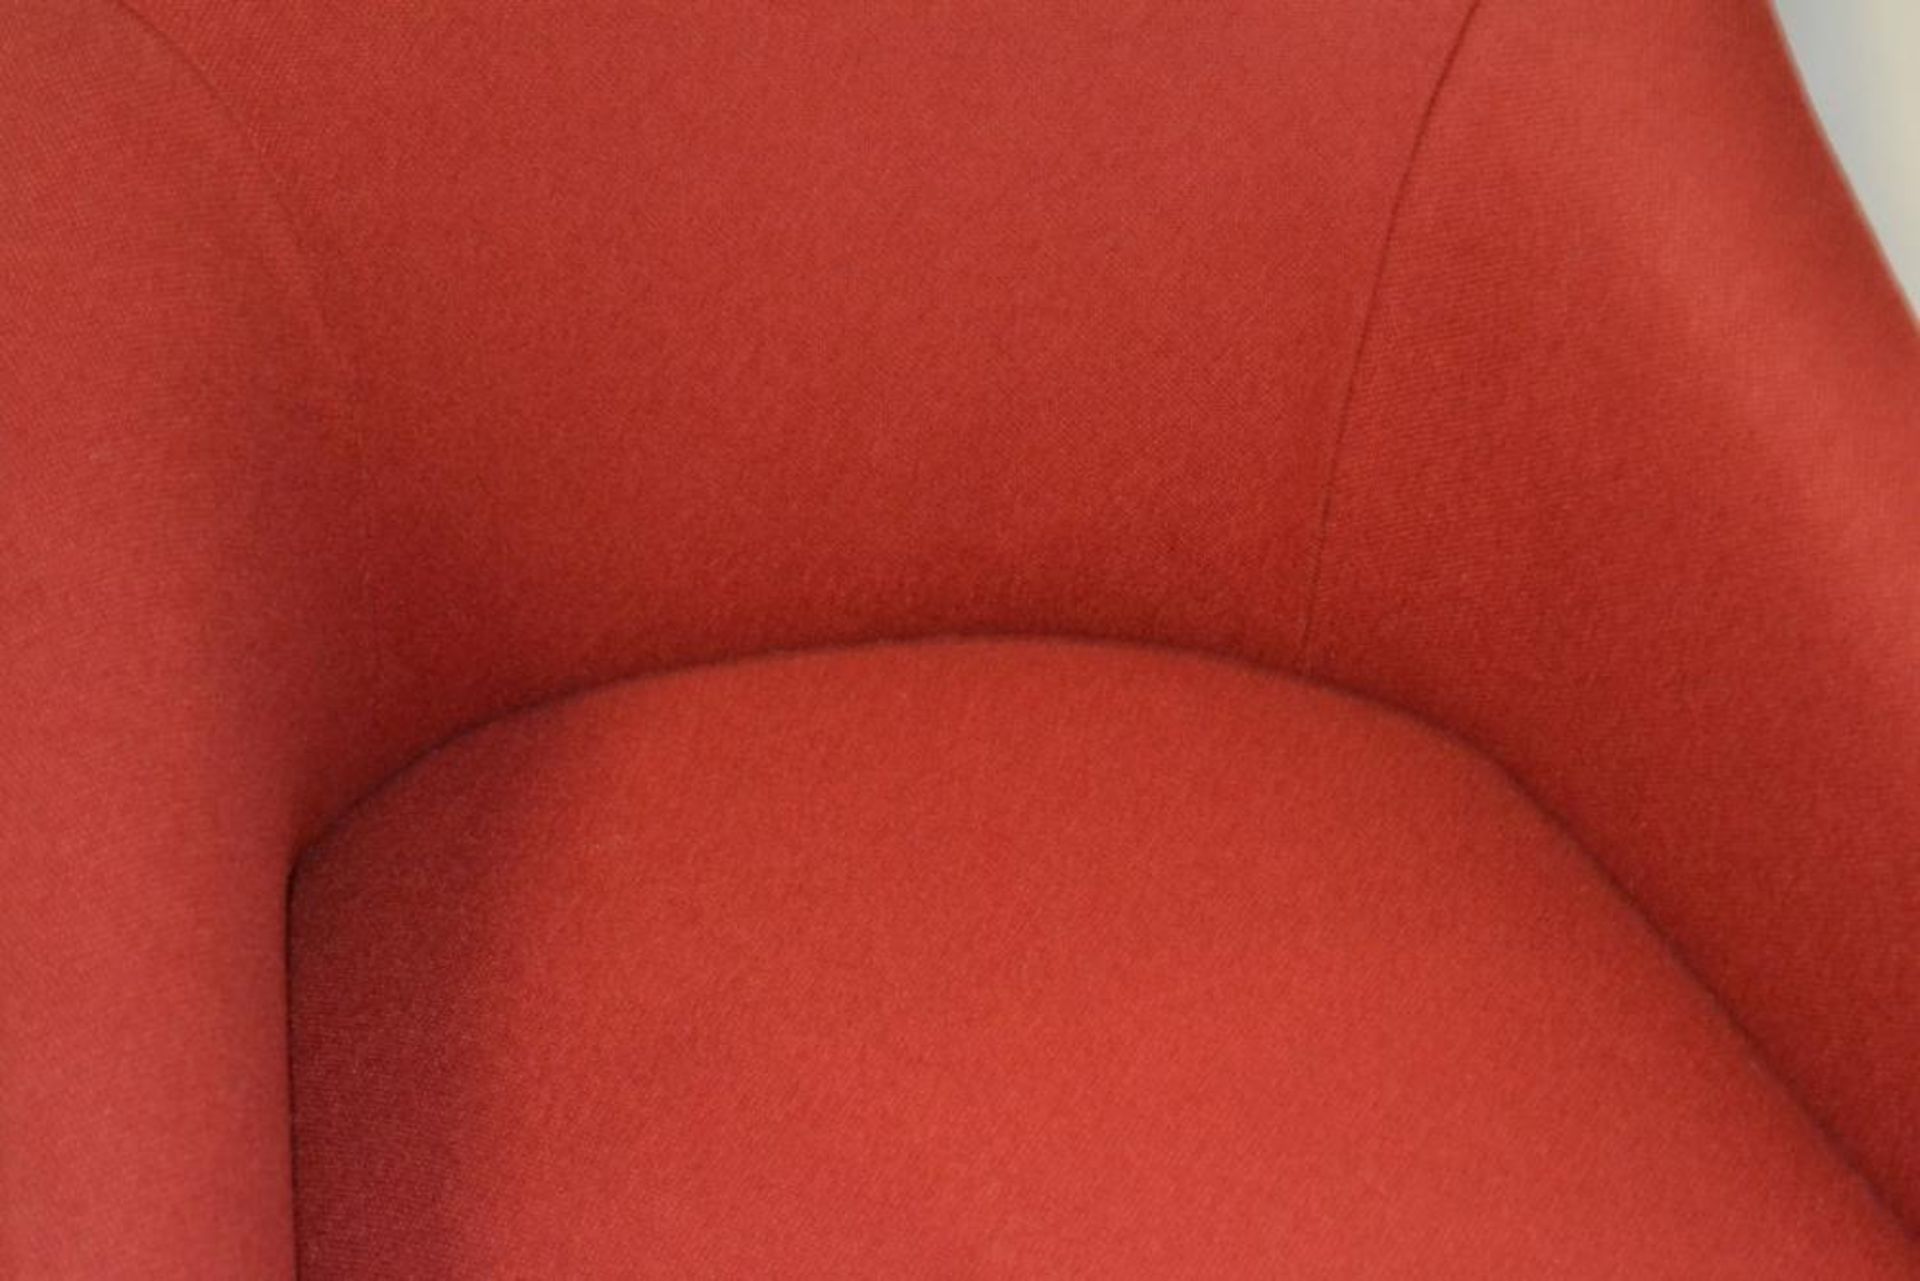 1 x B&B ITALIA Maxalto "Agathos" Armchair In Bright Red With Black Legs - Designed By Antonio Citter - Image 5 of 7